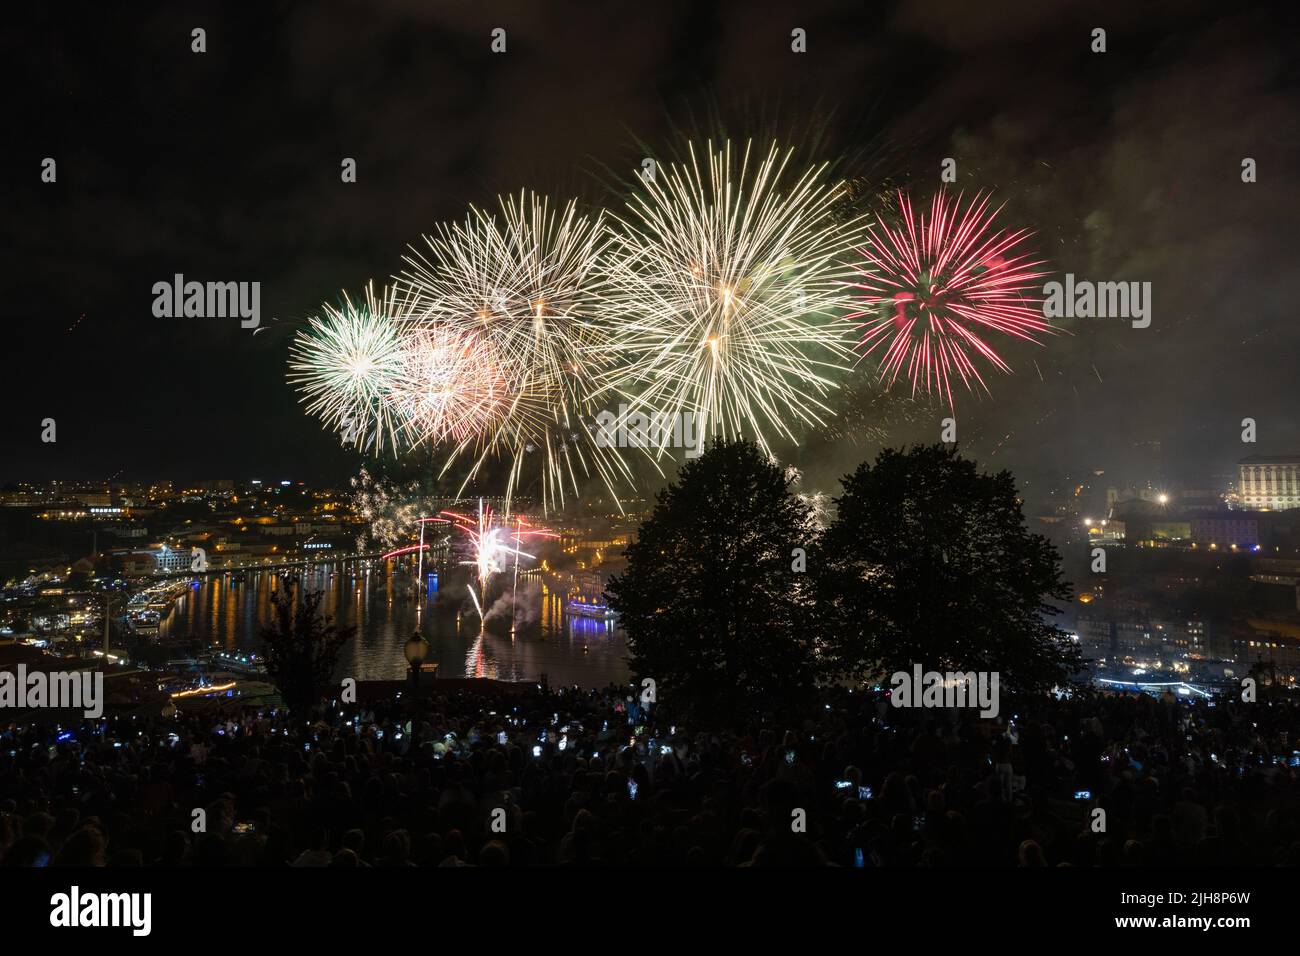 Fireworks on the Douro river in Porto, Portugal, celebrating Festas de São João - John the Baptist Stock Photo